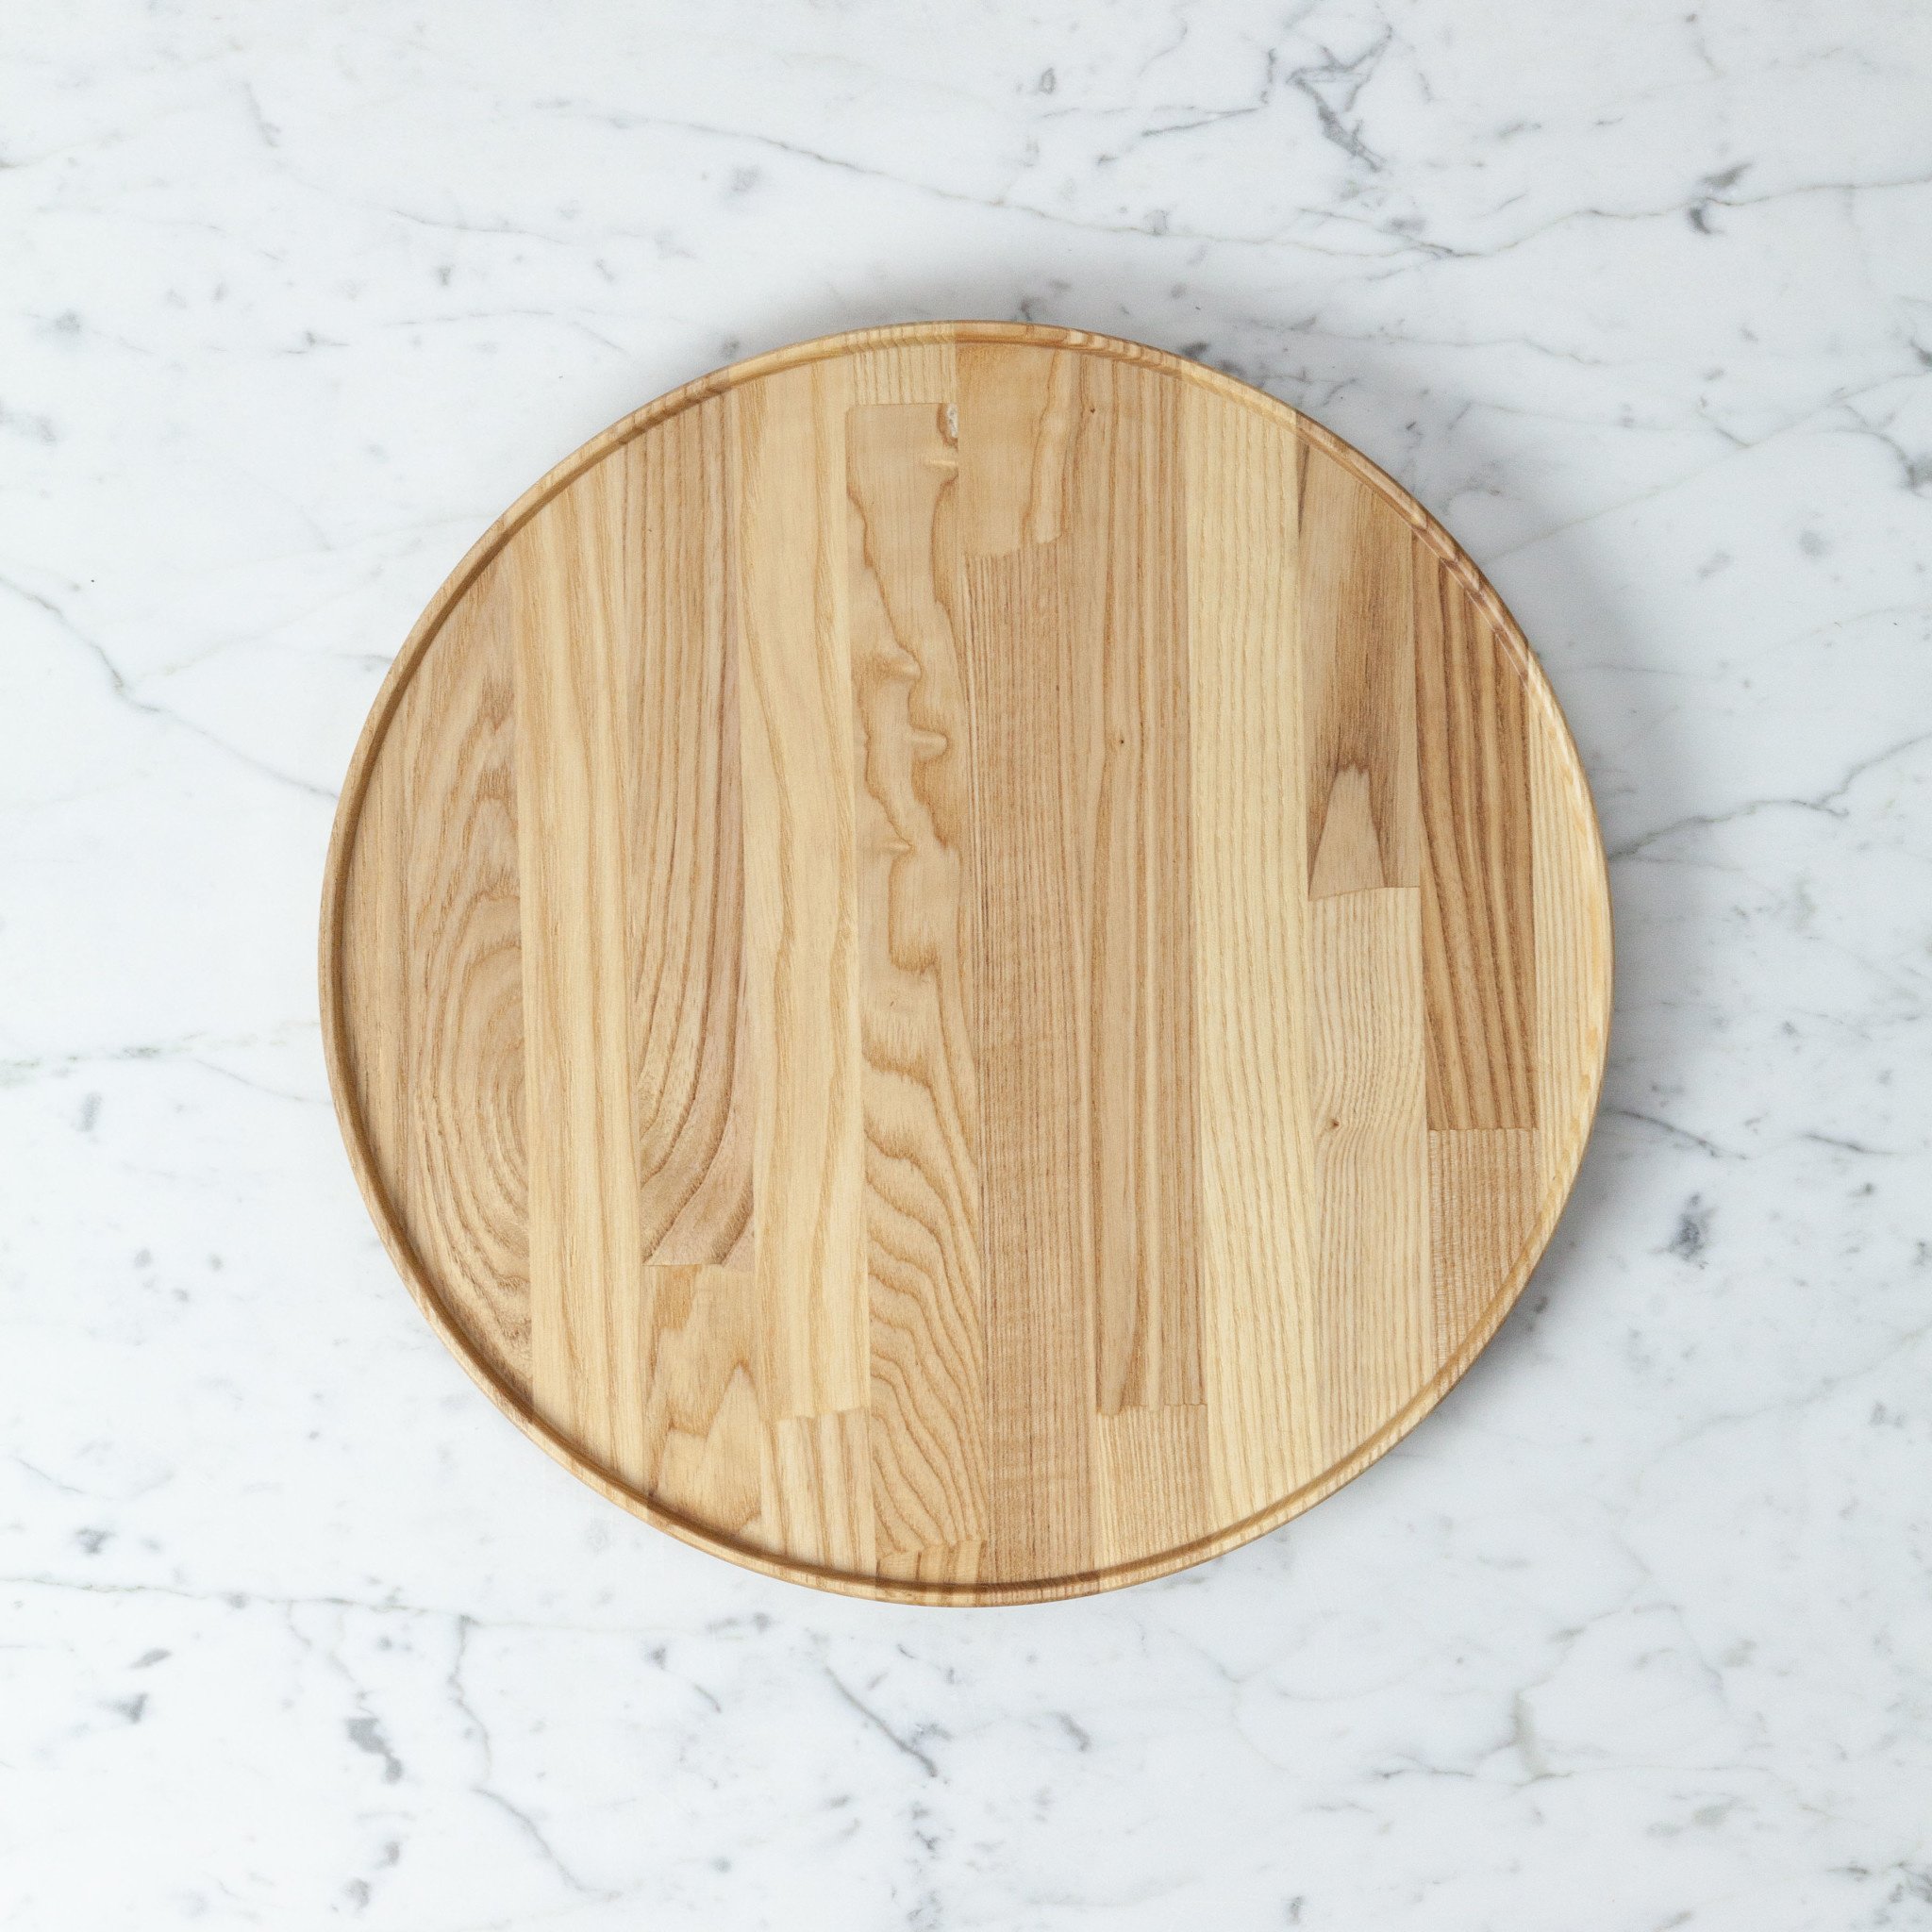 Hasami Ash Wood Round Tray Extra, Extra Large Wooden Tray